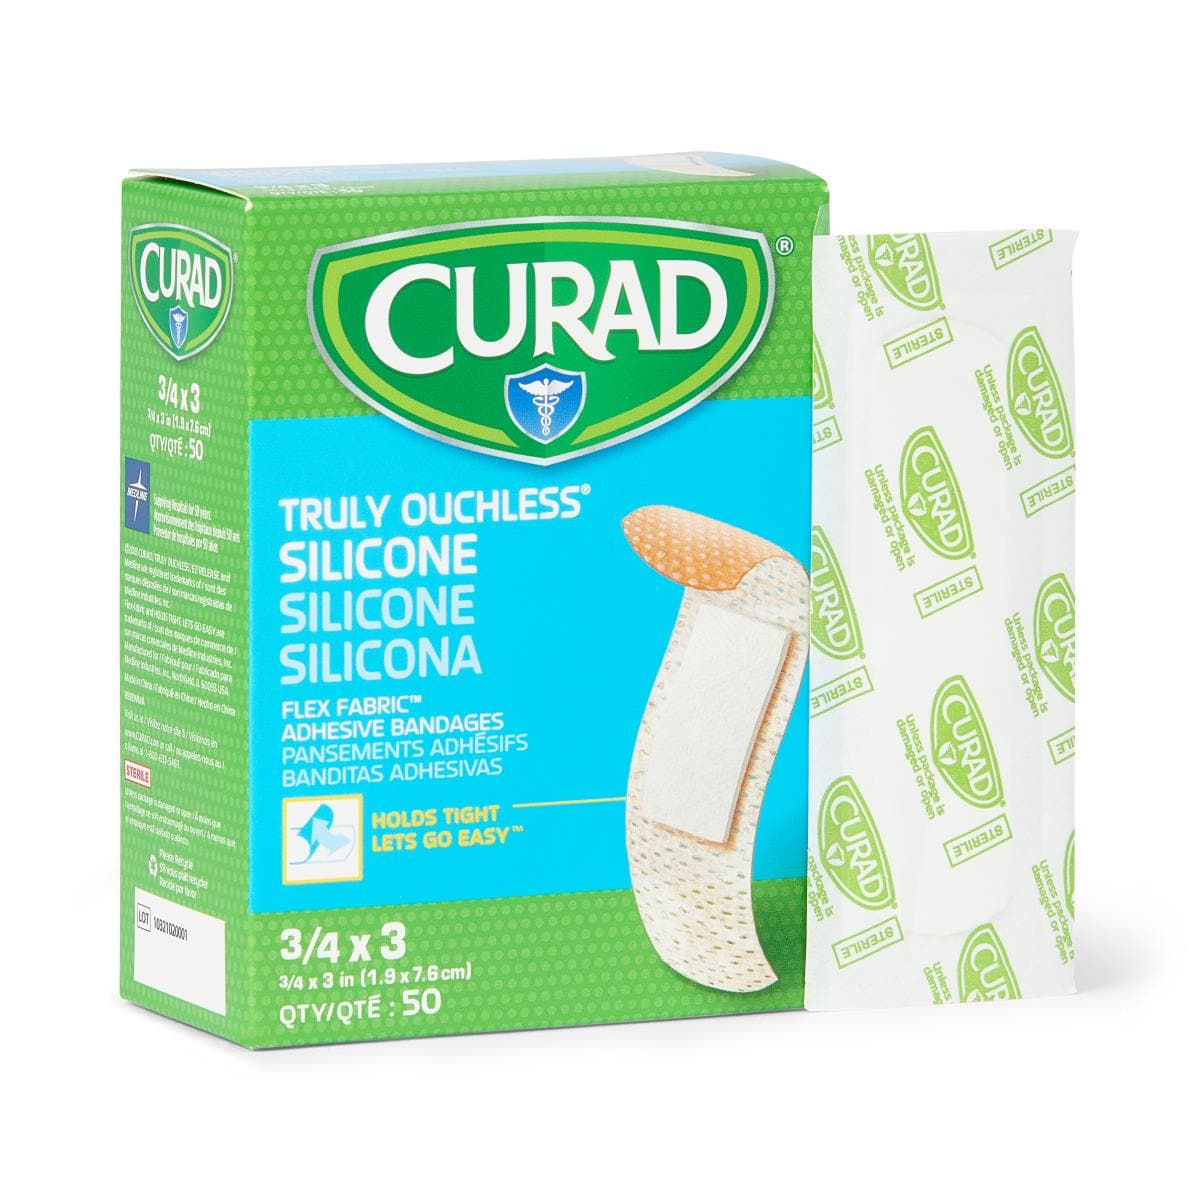 Medline 3/4"x4" / Box of 50 Medline CURAD Silicone Adhesive Bandages